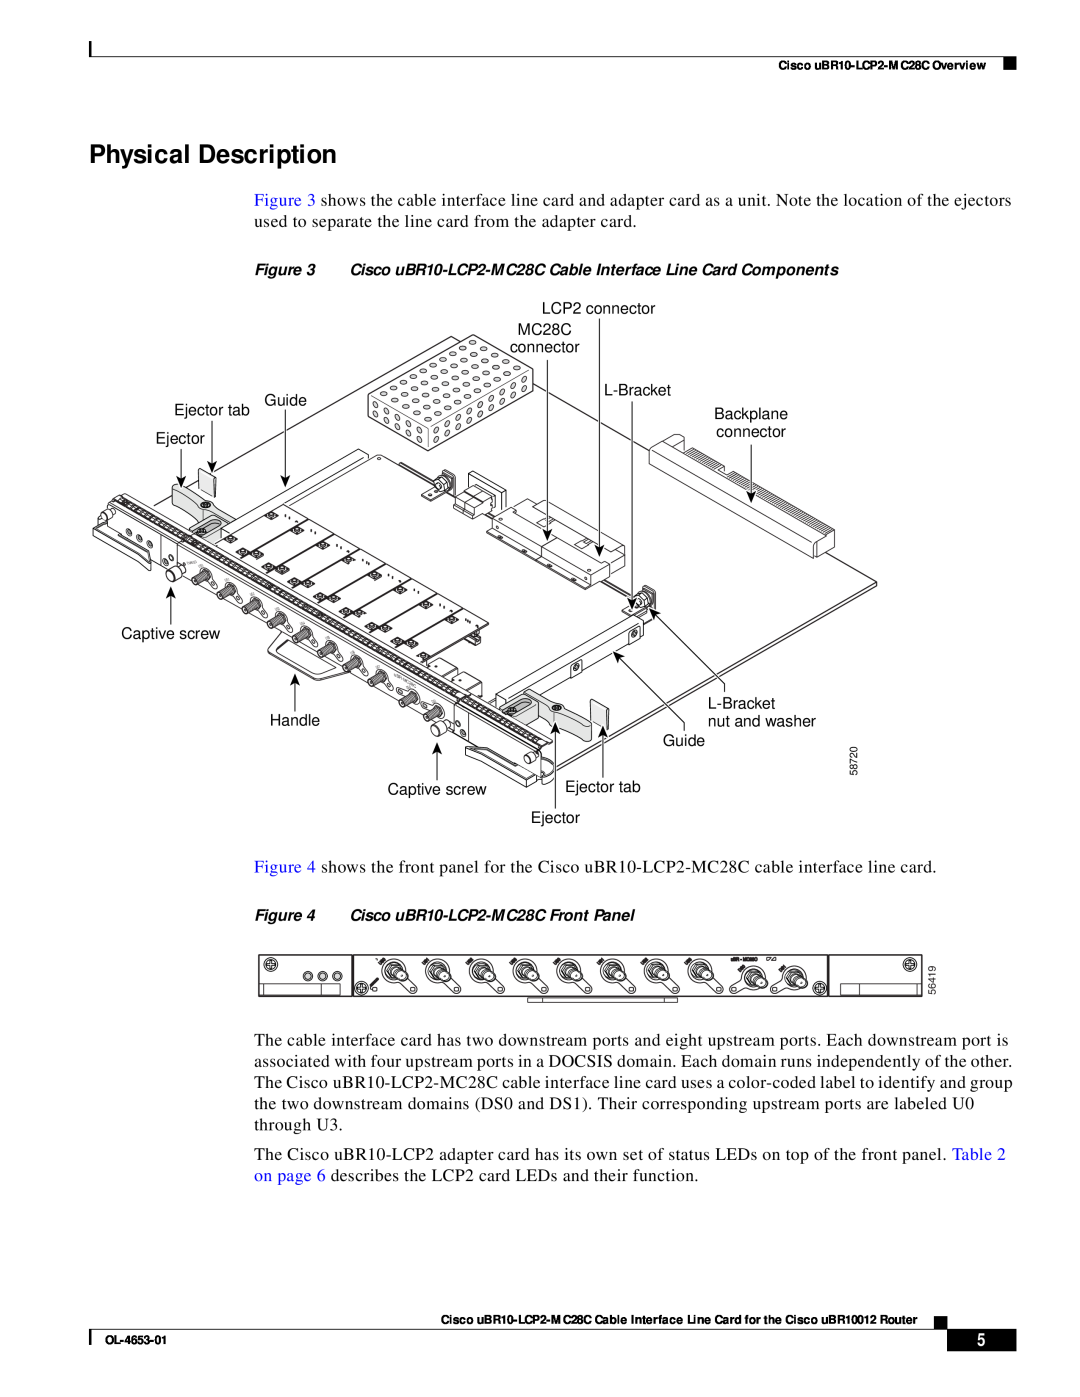 Cisco Systems manual Physical Description, Cisco uBR10-LCP2-MC28C Cable Interface Line Card Components 